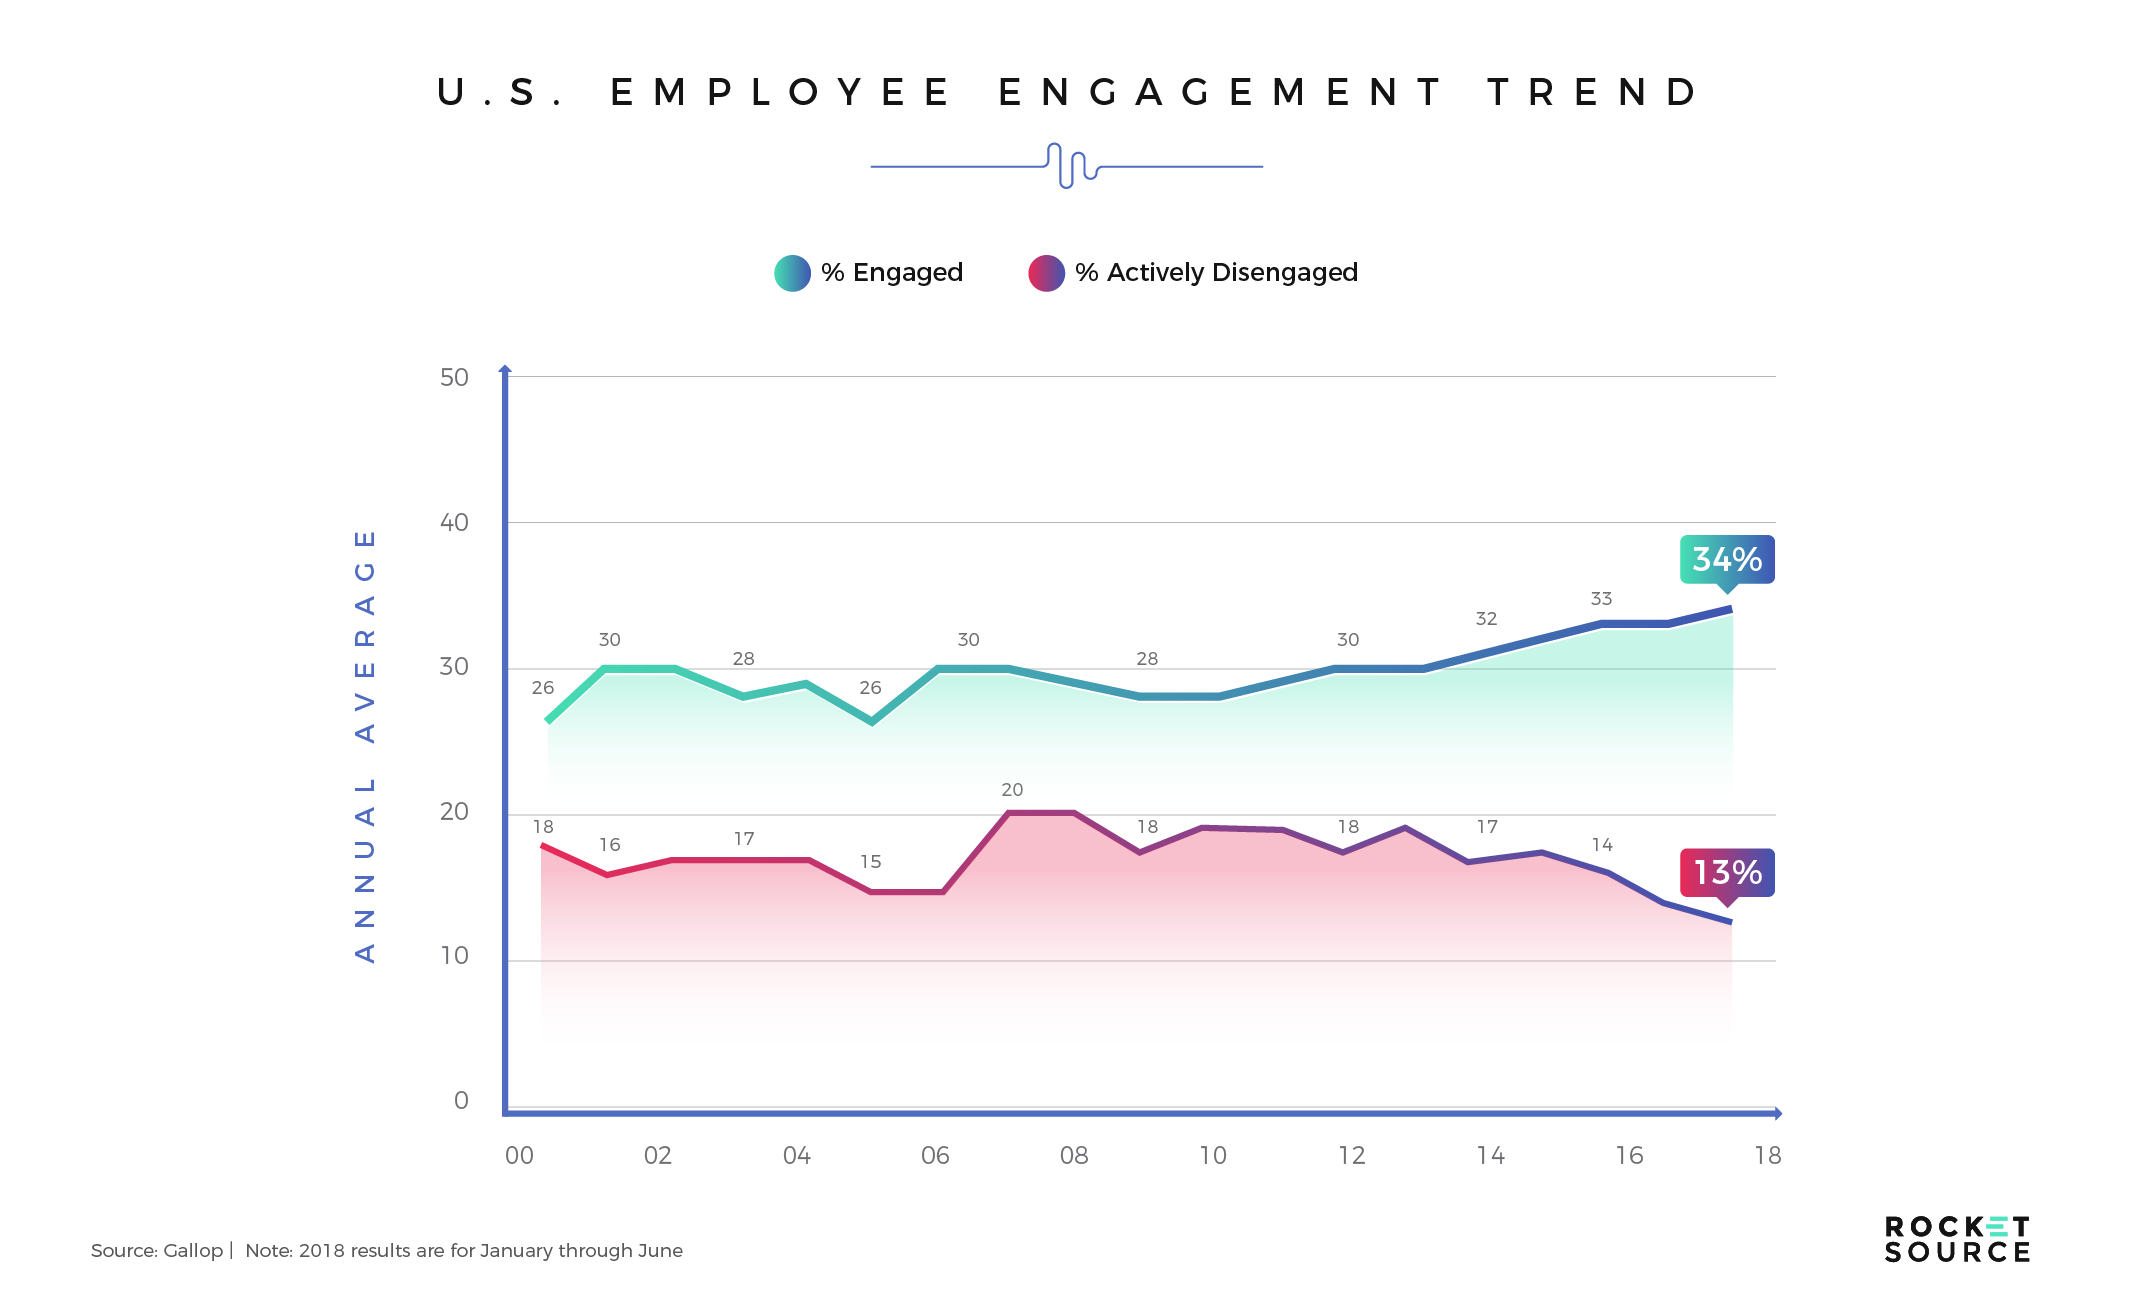 digital transformation through increased employee engagement